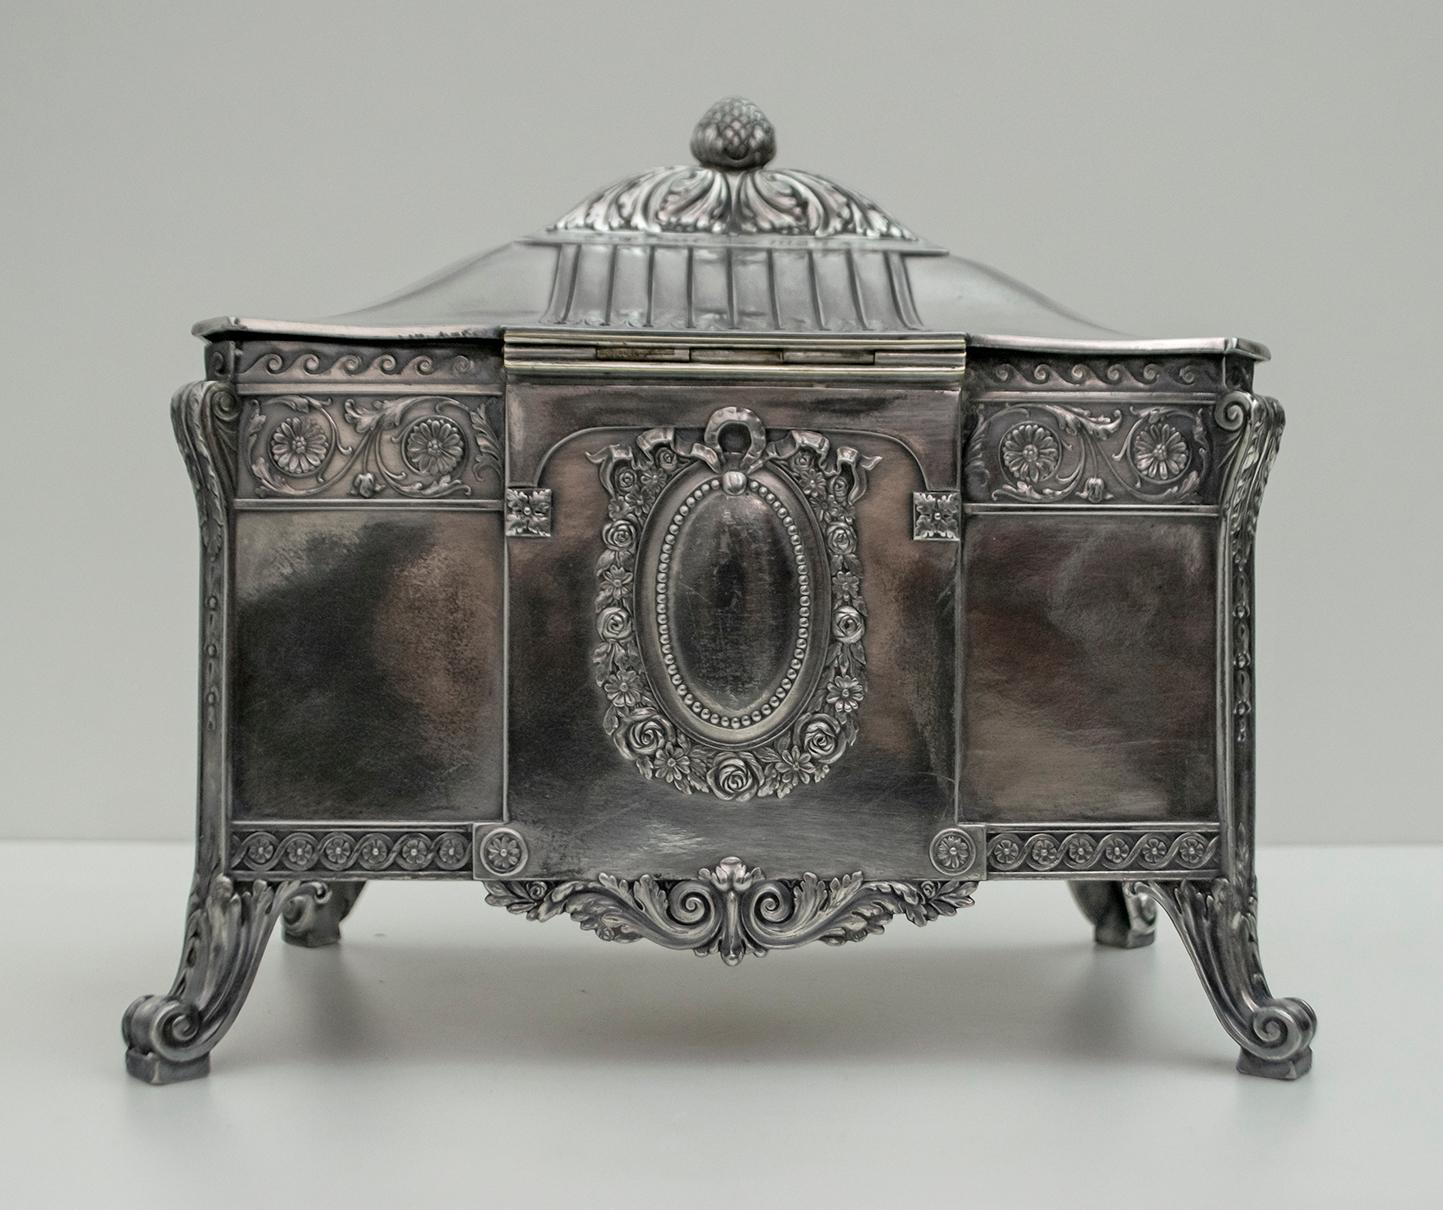 WMF Art Nouveau Germany Silver Plate Jewelery Box, 1900s For Sale 3